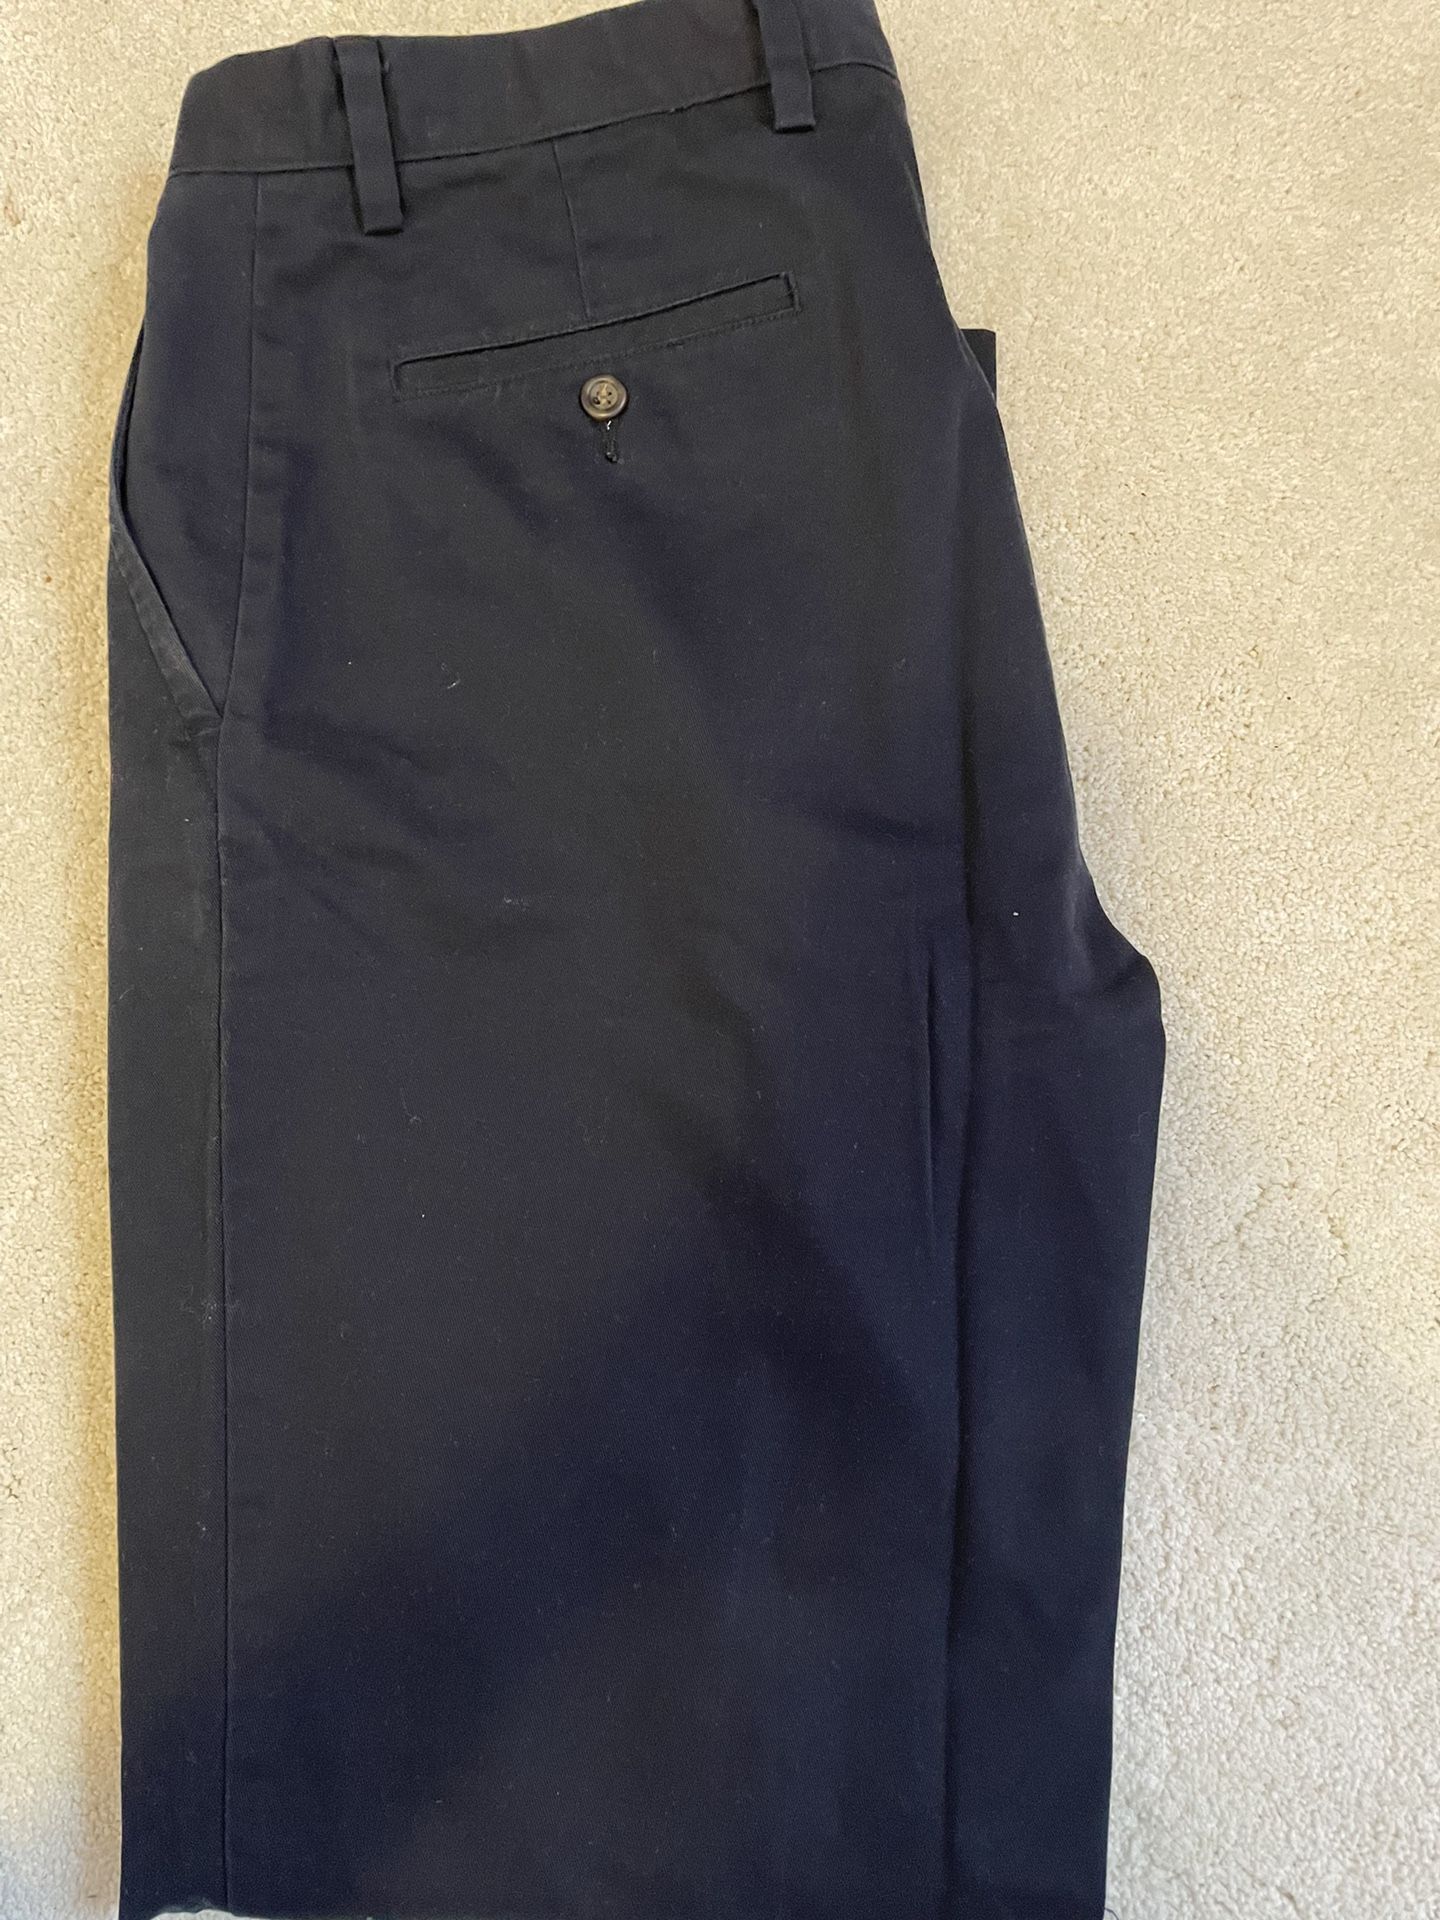 Dockers Dress Pants 36X32